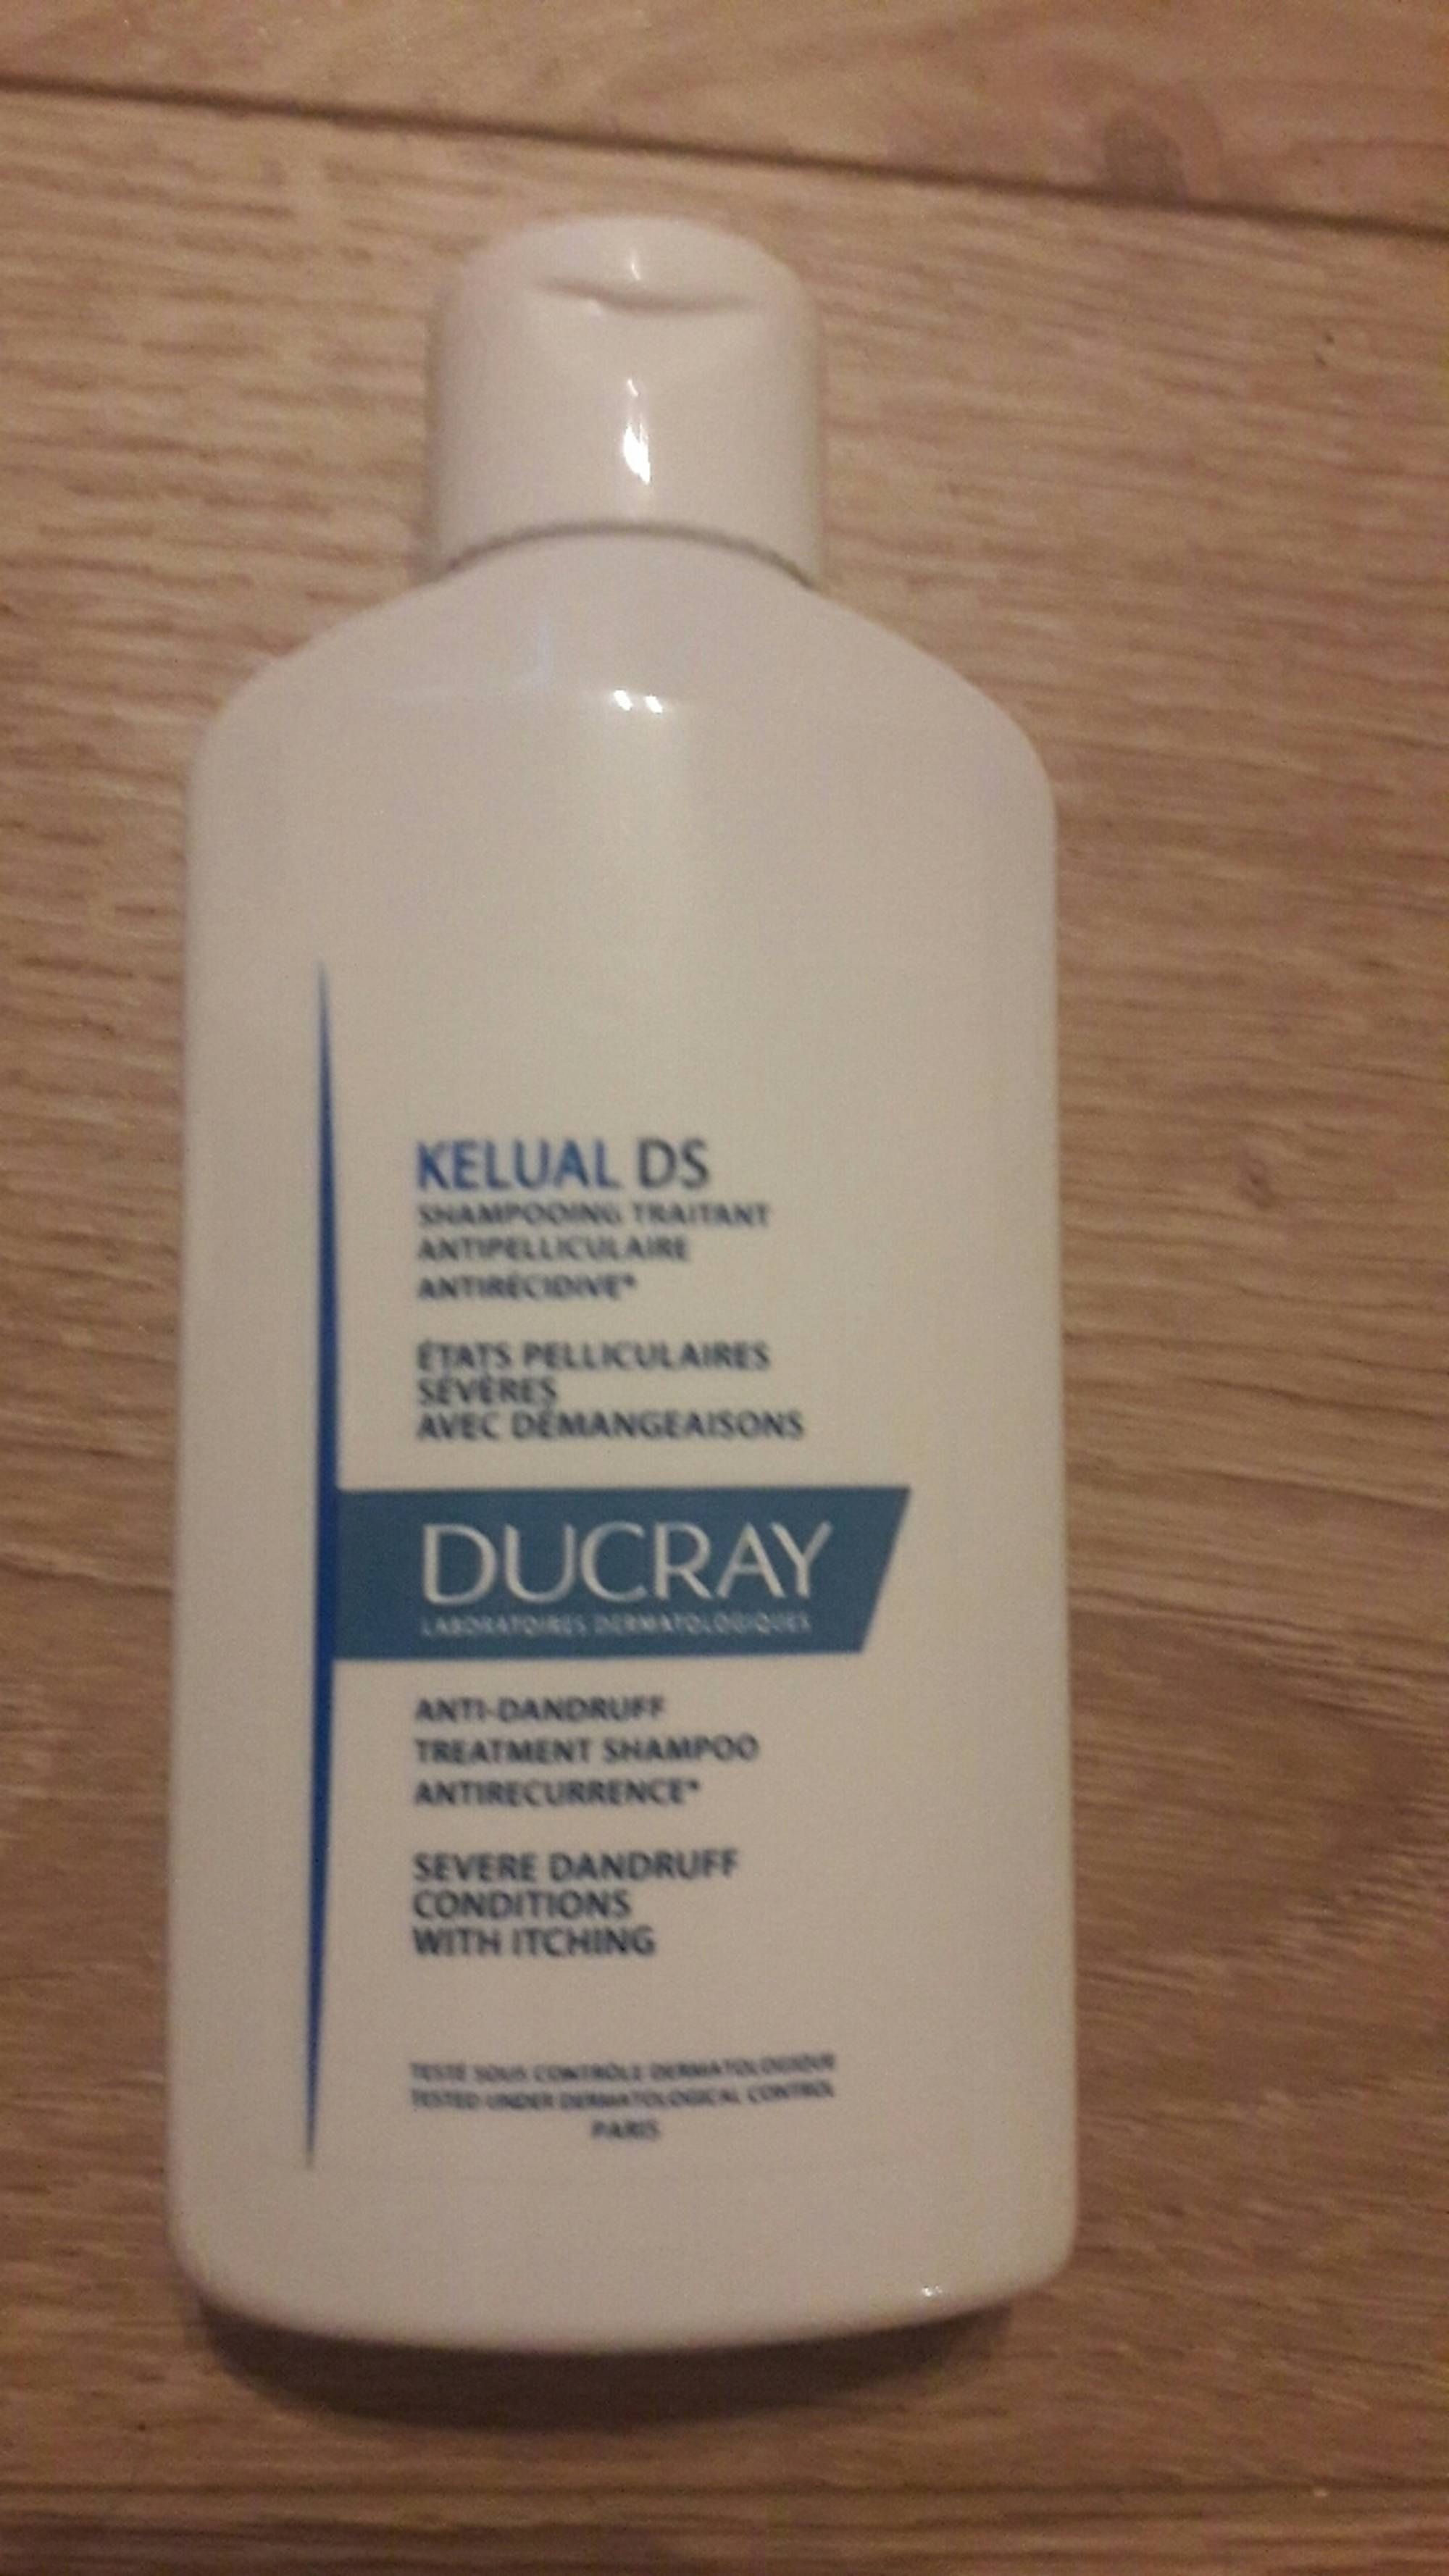 DUCRAY - Kelual Ds - Shampooing traitant antipelliculaire